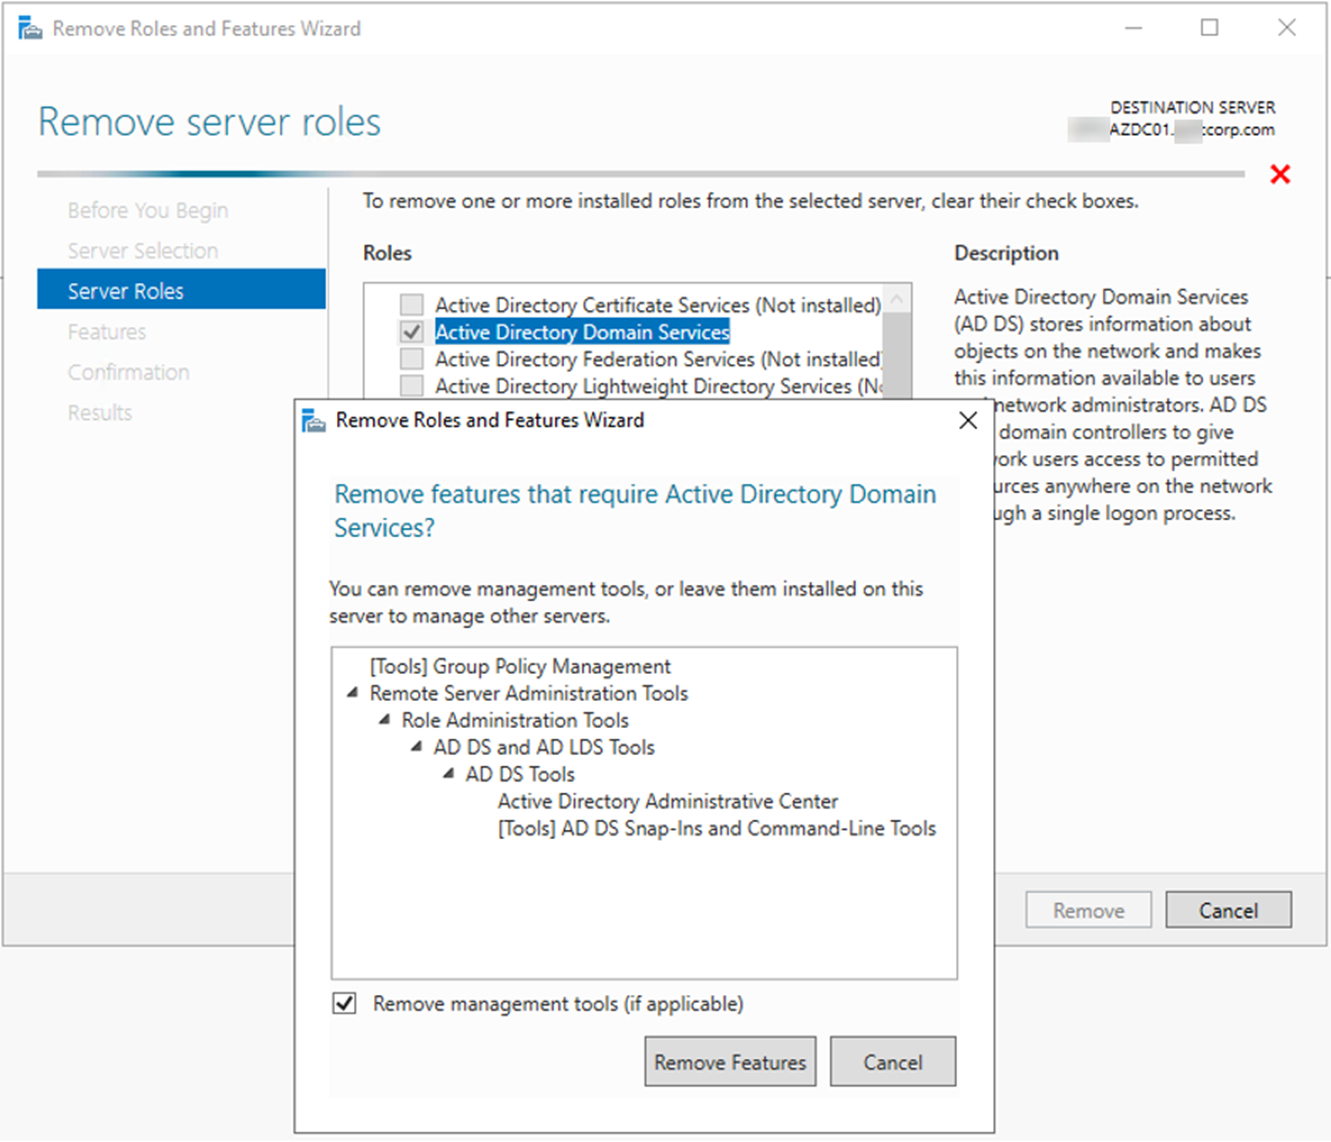 101120 0520 HowtoDemote21 - How to Demote Microsoft Windows Server 2019 Domain Controller Virtual Machine at Azure